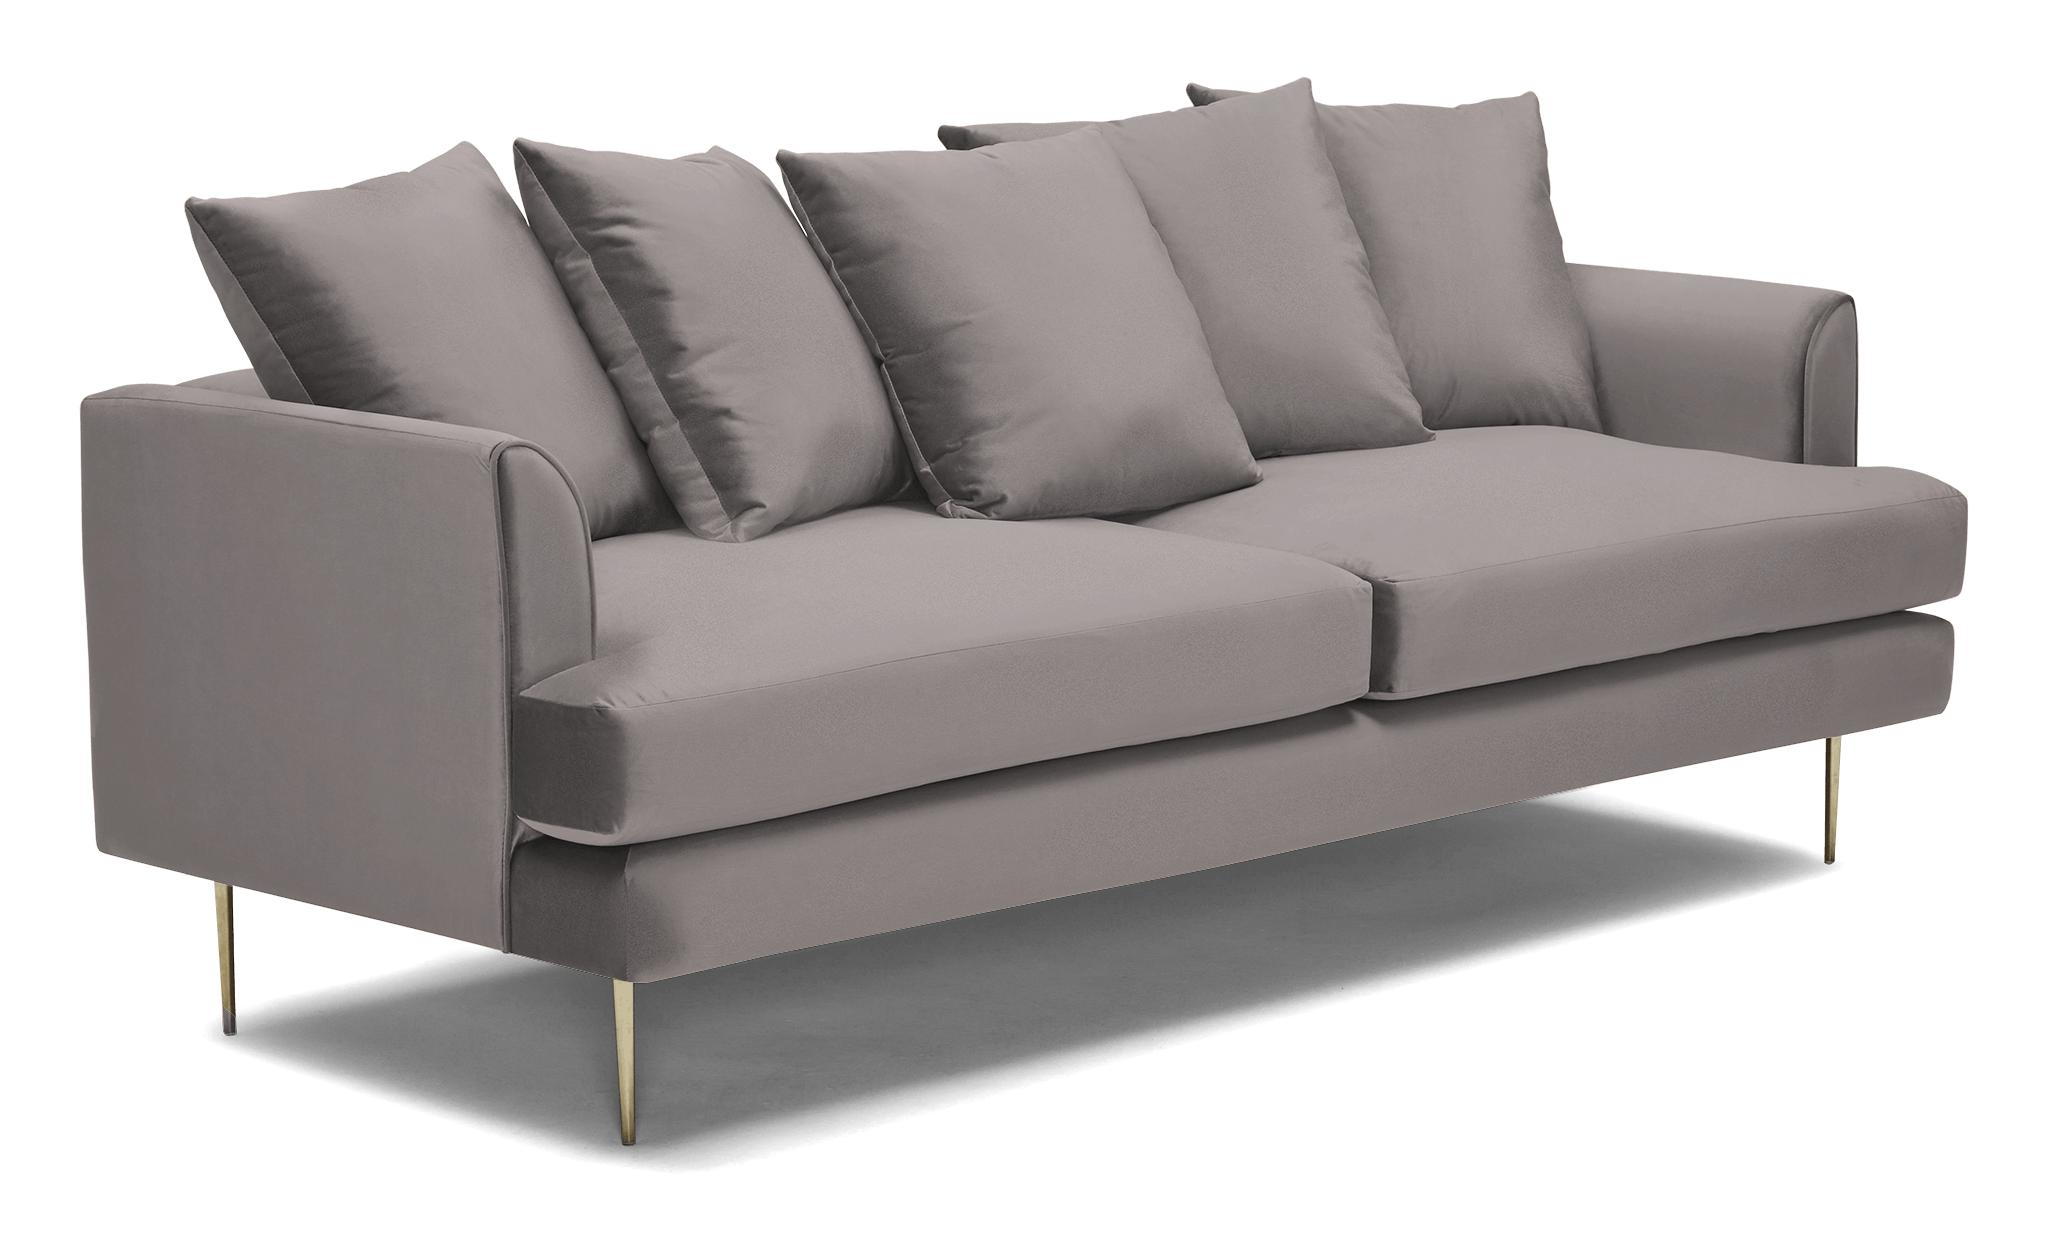 Purple Aime Mid Century Modern Sofa - Sunbrella Premier Wisteria - Image 1